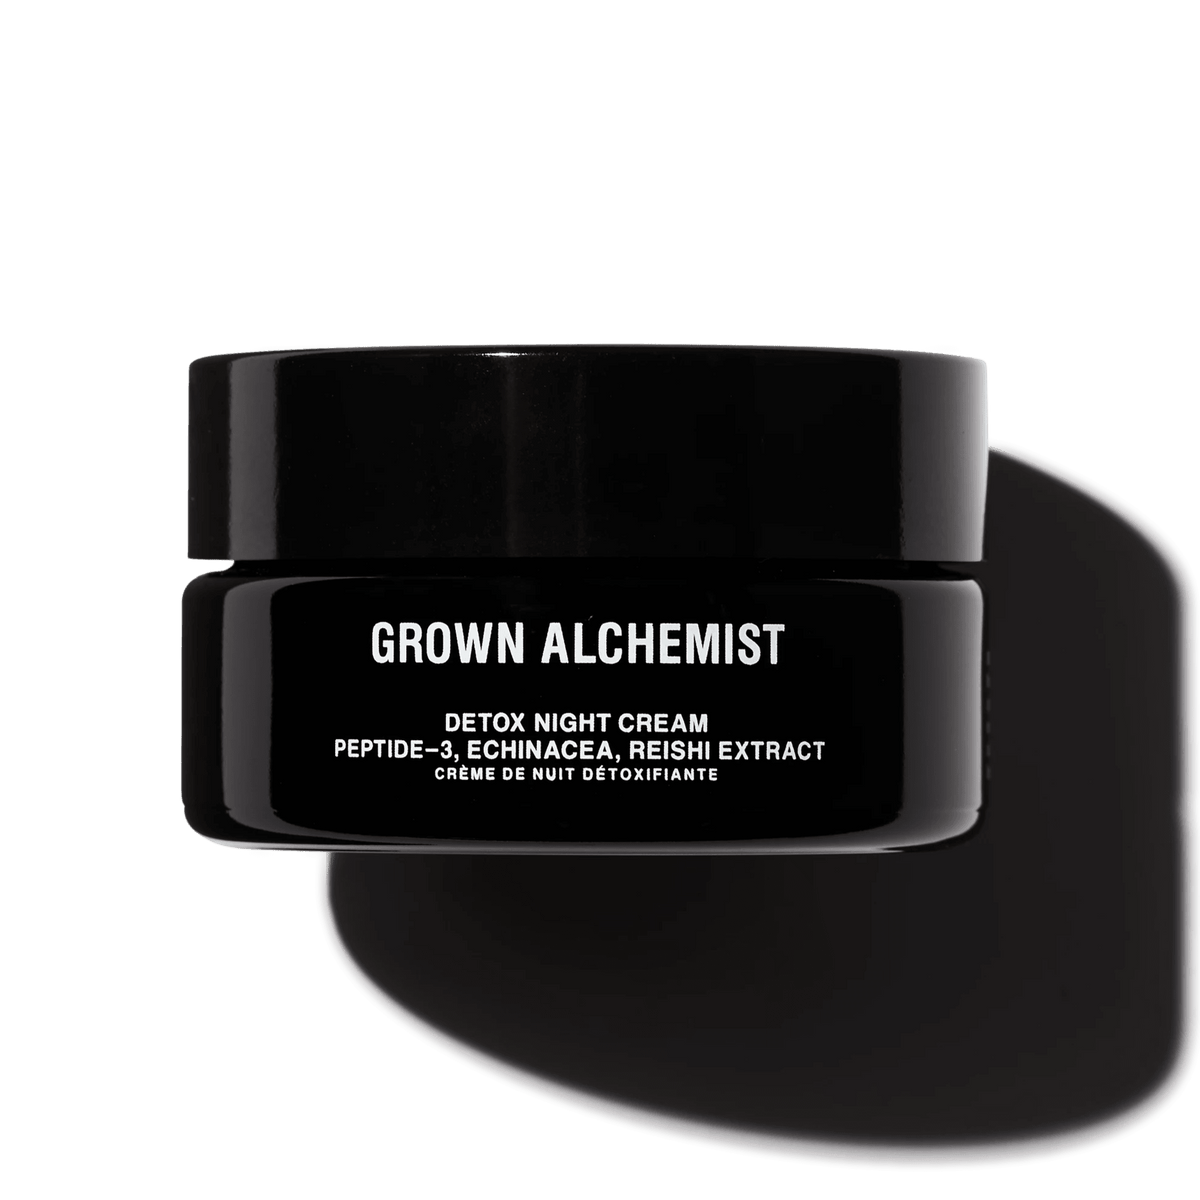 Grown Alchemist Detox Night Cream: Peptide-3, Echinacea, Reishi Extract at Socialite Beauty Canada